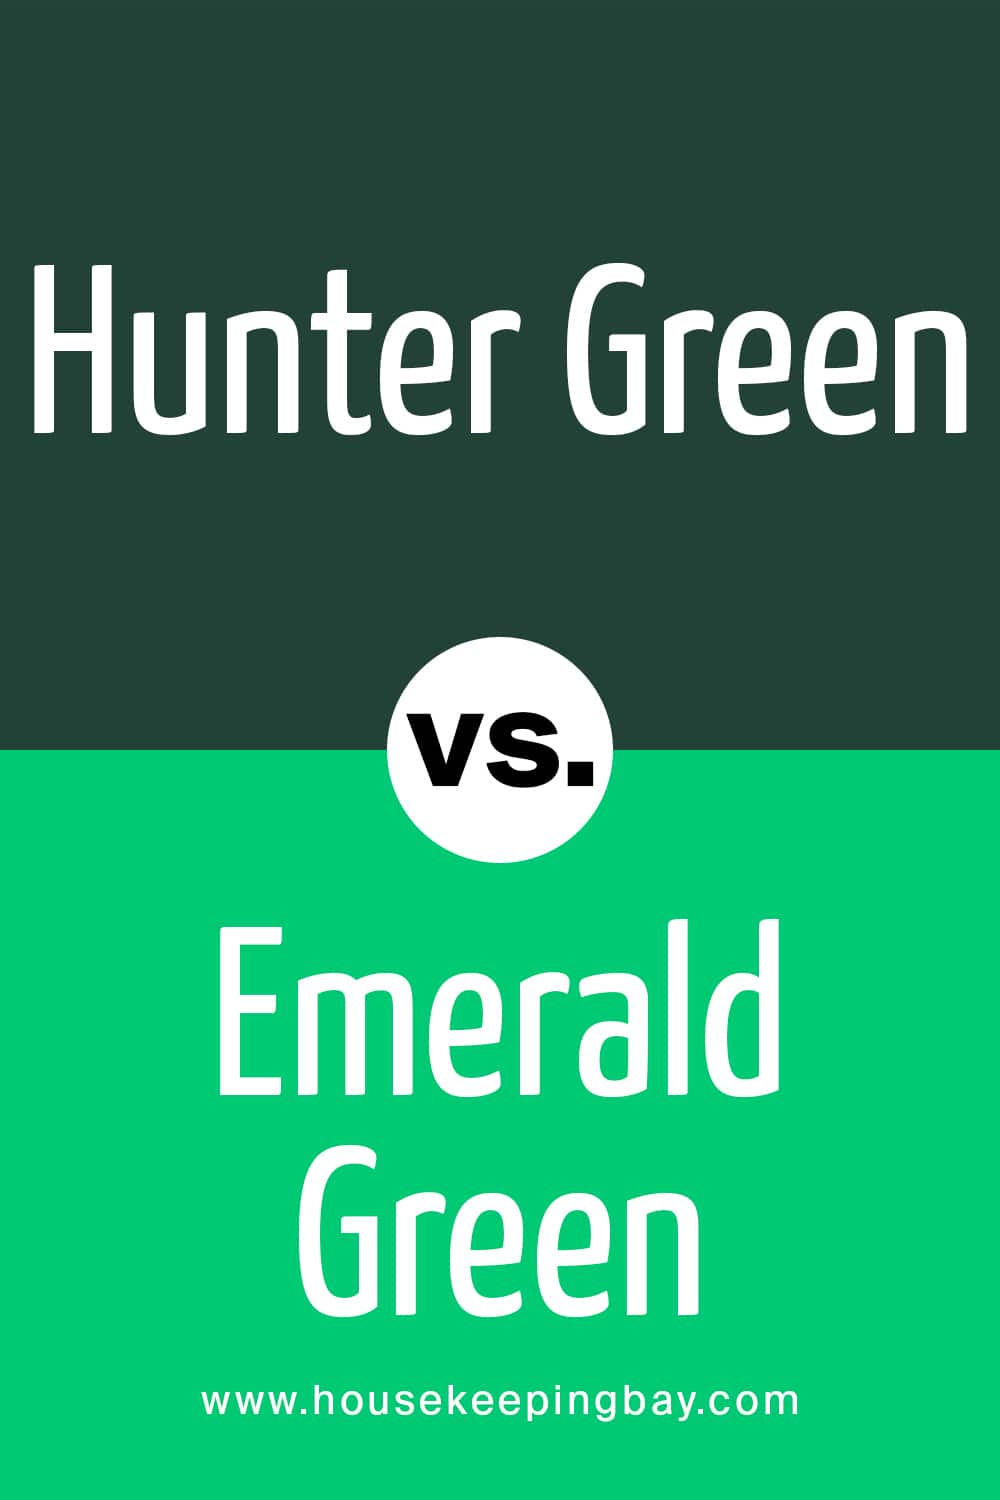 Hunter Green vs. Emerald Green